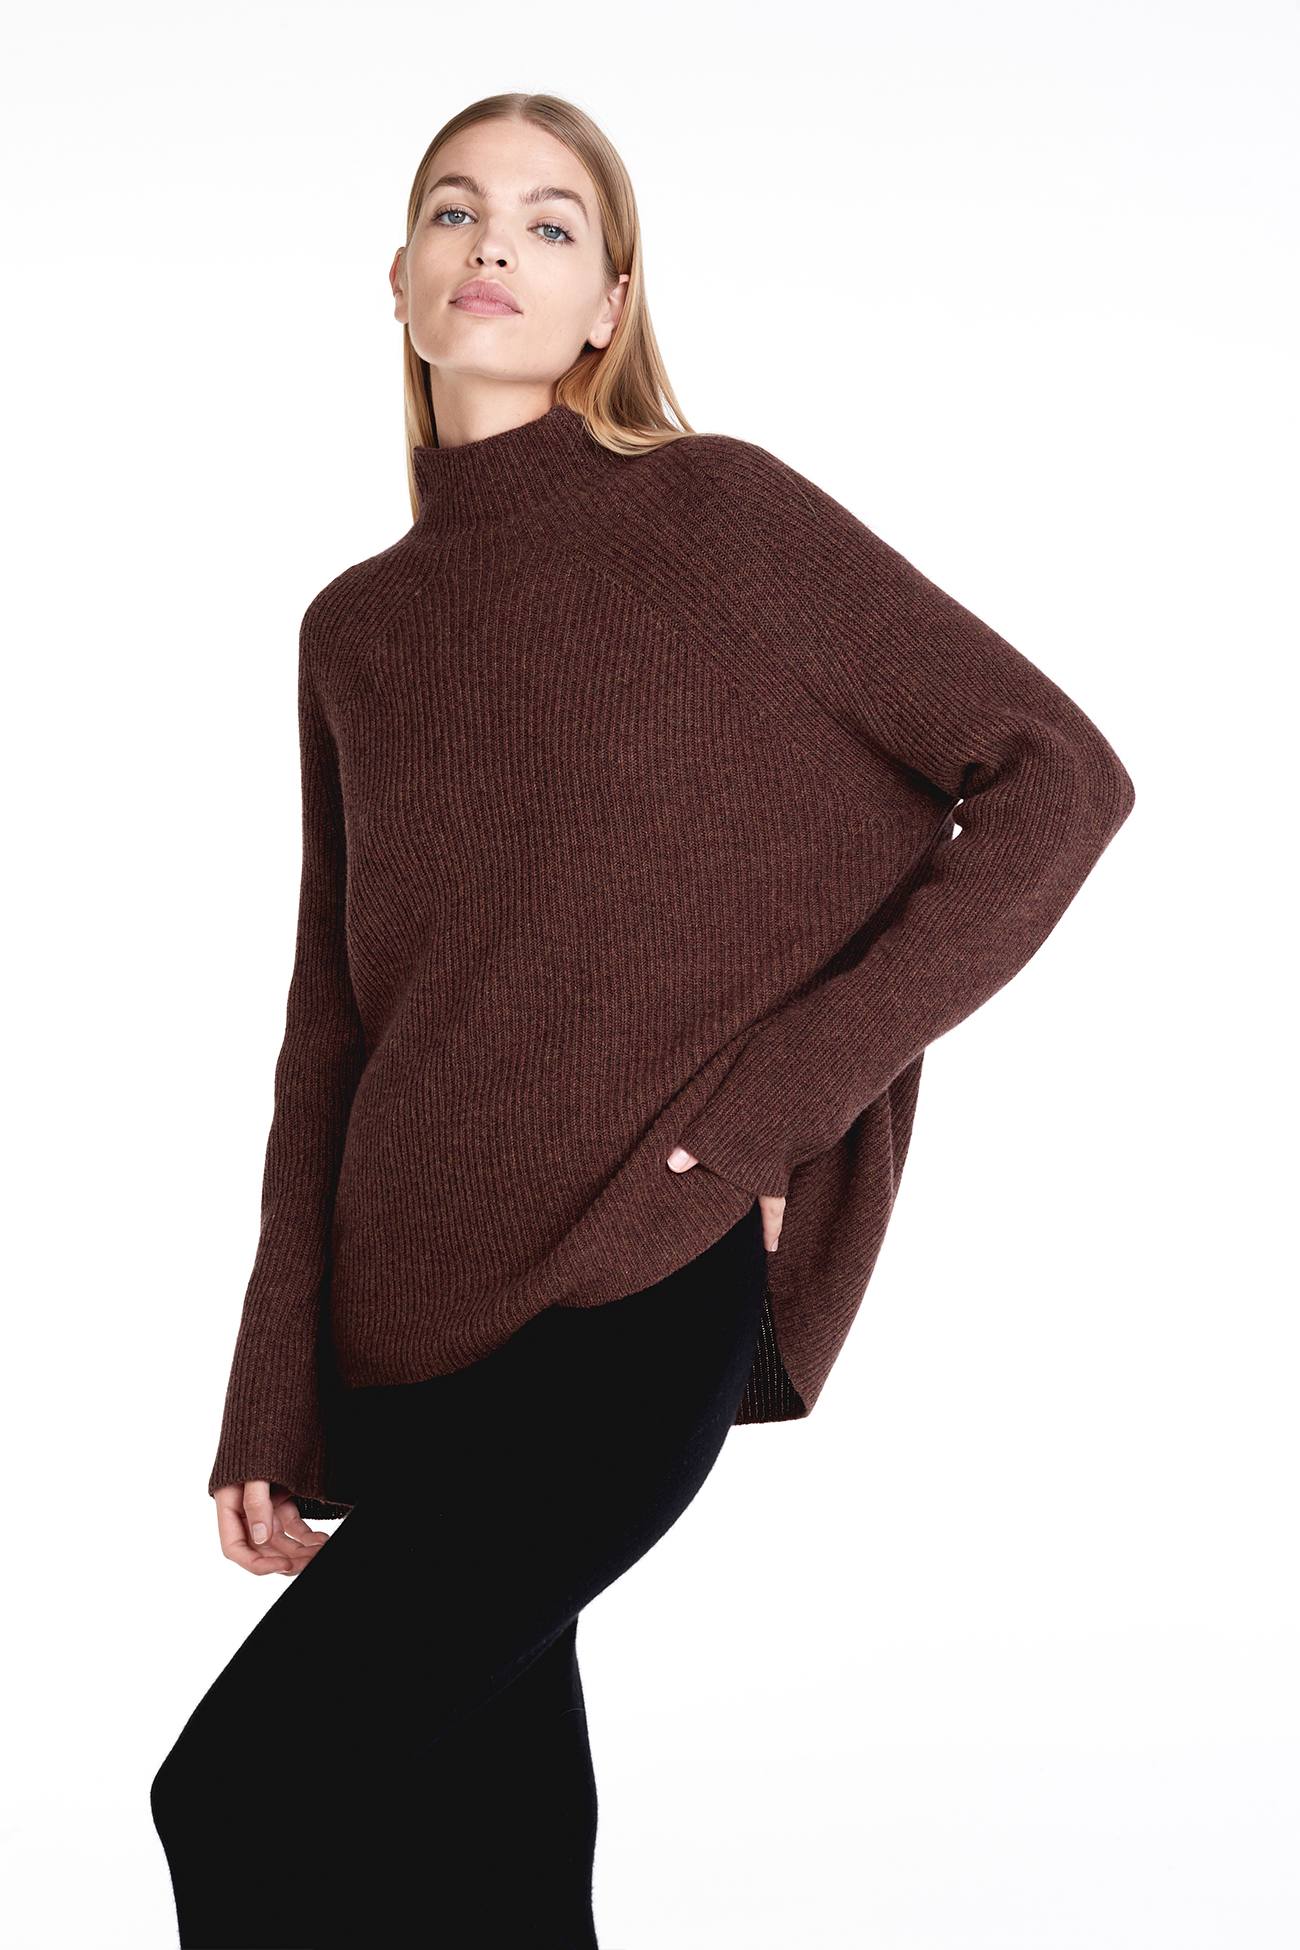 Cora Charcoal Sweater Dress - Elitaire Boutique